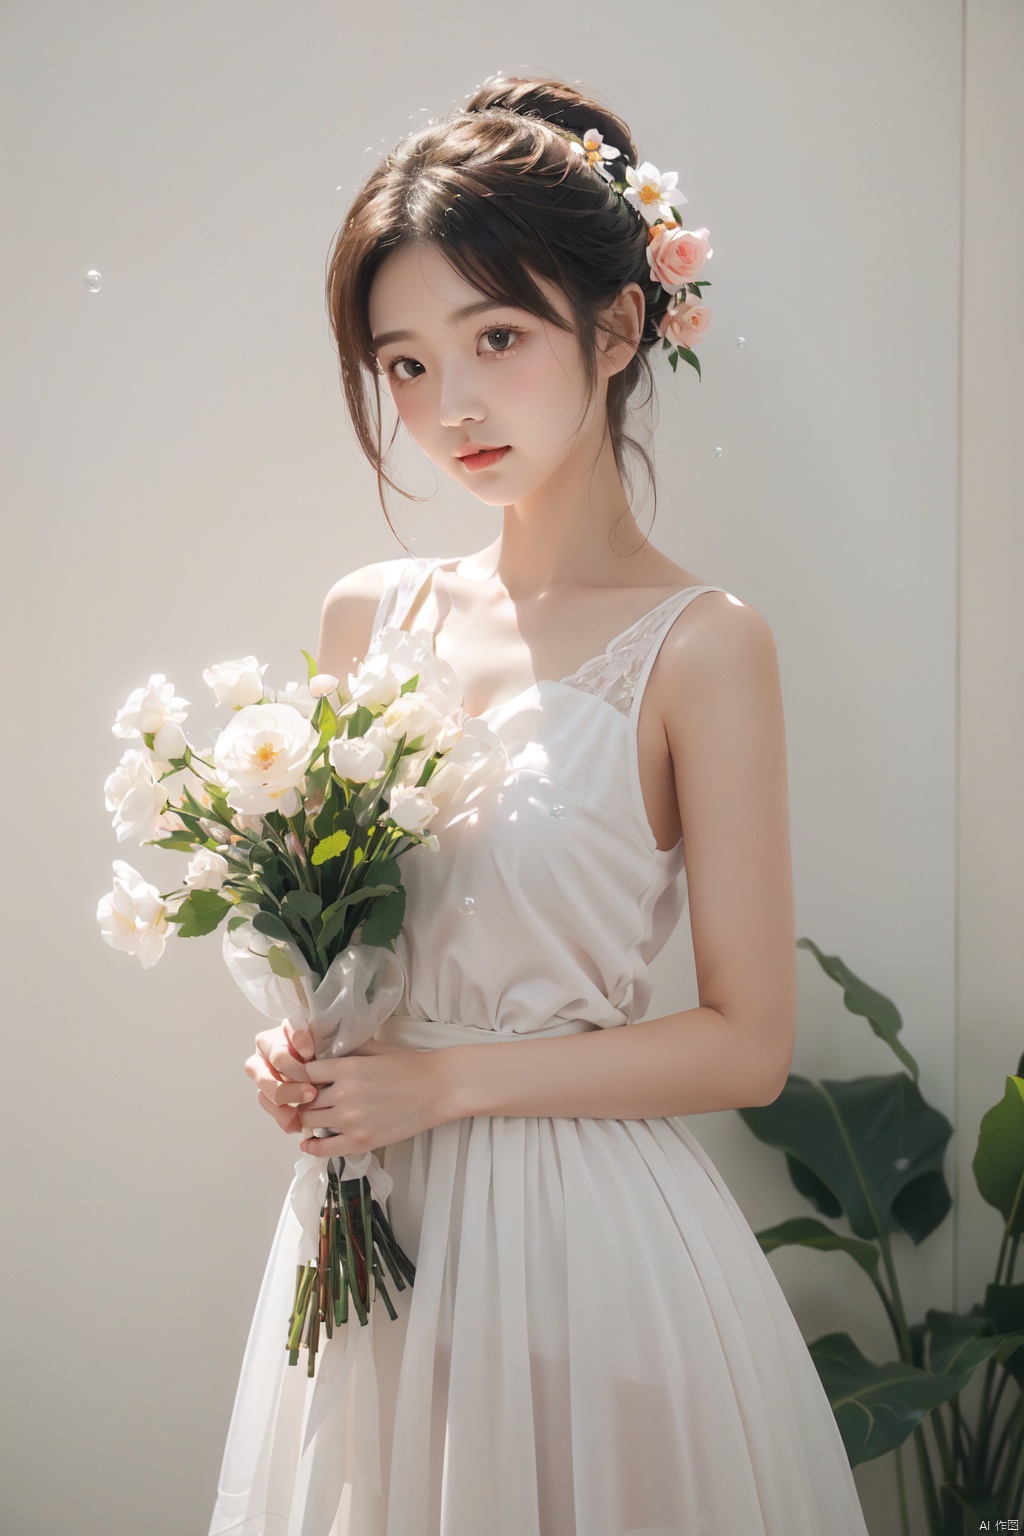  (bubble:1.3), 1 girl, cute, white dress, holding a bouquet of flowers, black short hair, light white wall, (\meng ze\), (\MBTI\), mjuanlian, jiqing, flower, pld